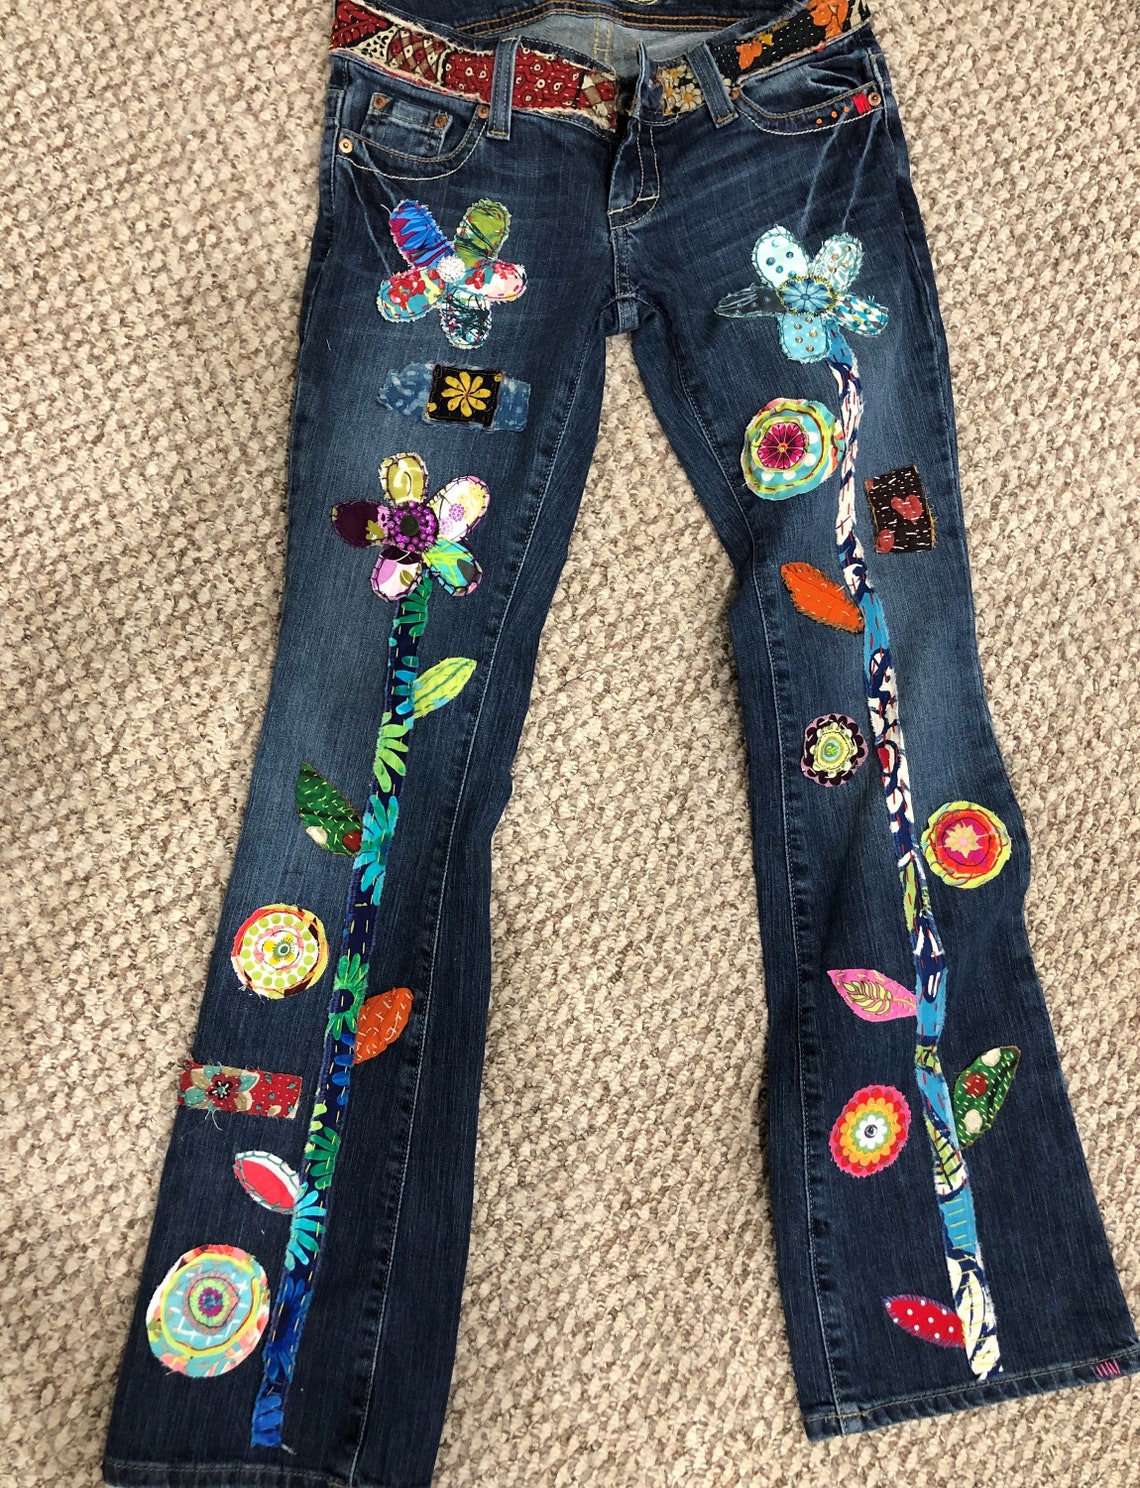 Patchwork jeans Hippie Boho denim patchwork recycled retro | Etsy